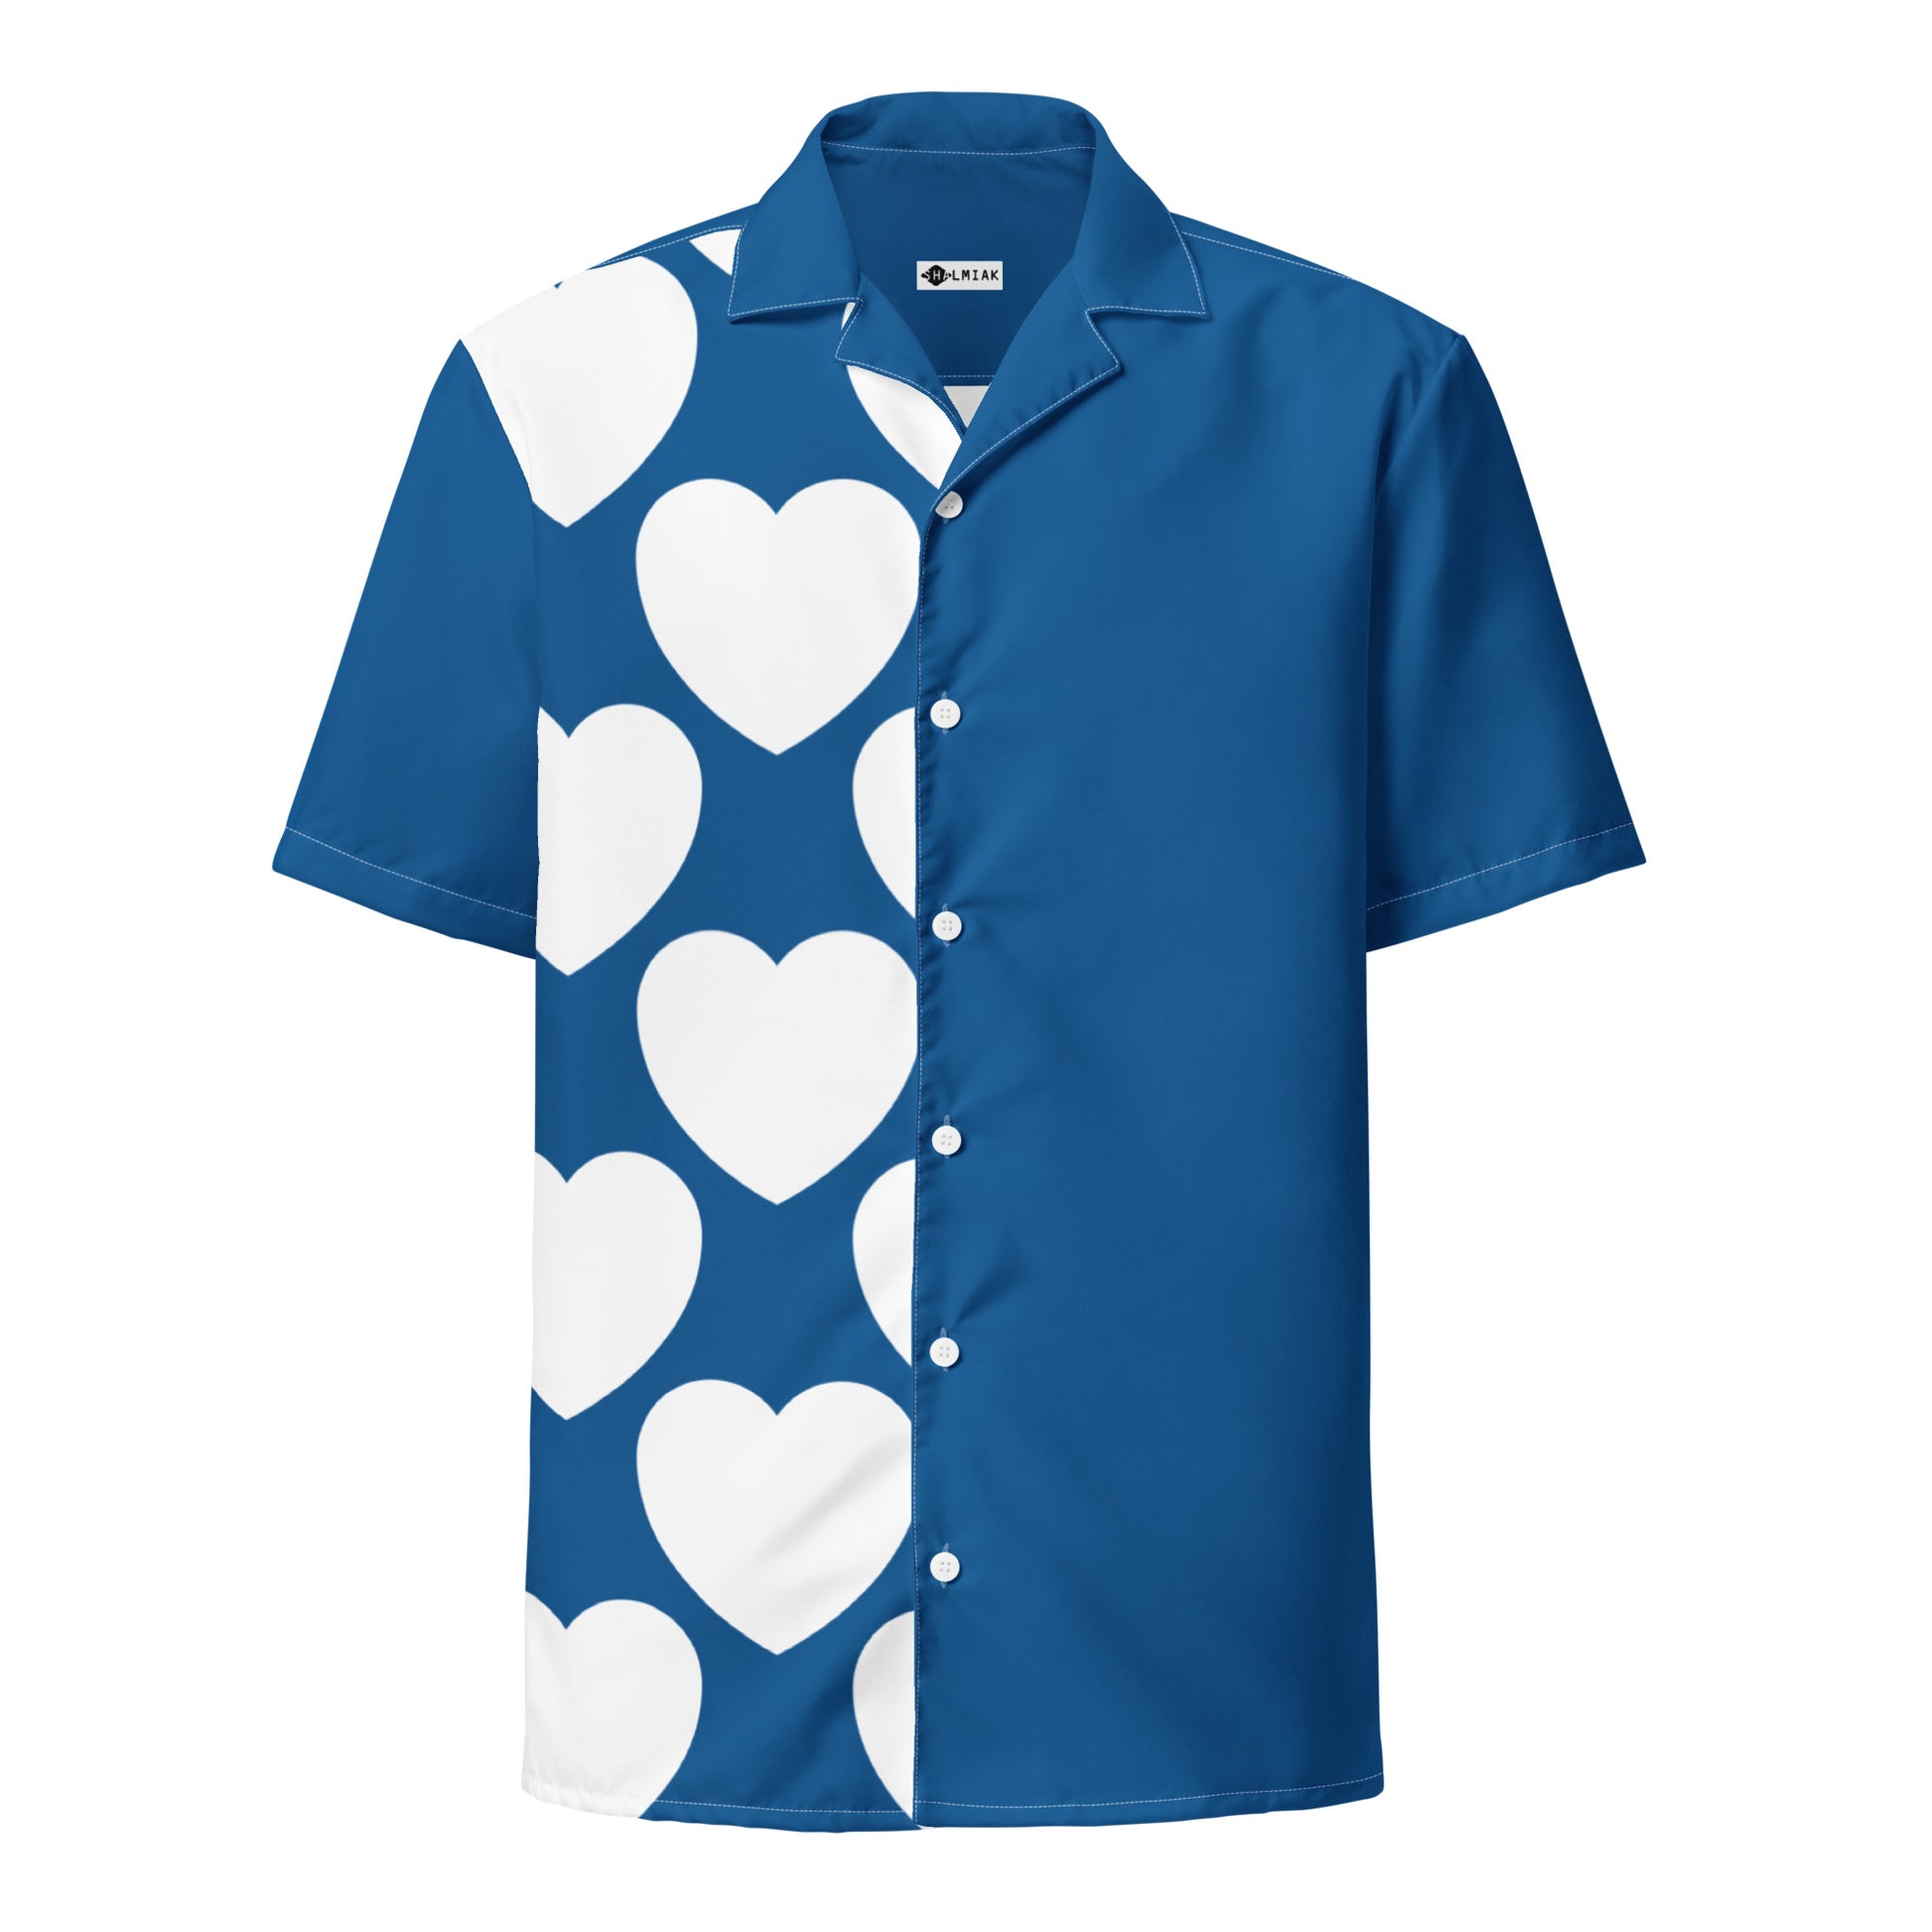 ELLIE LOVE fin -2- Unisex button shirt